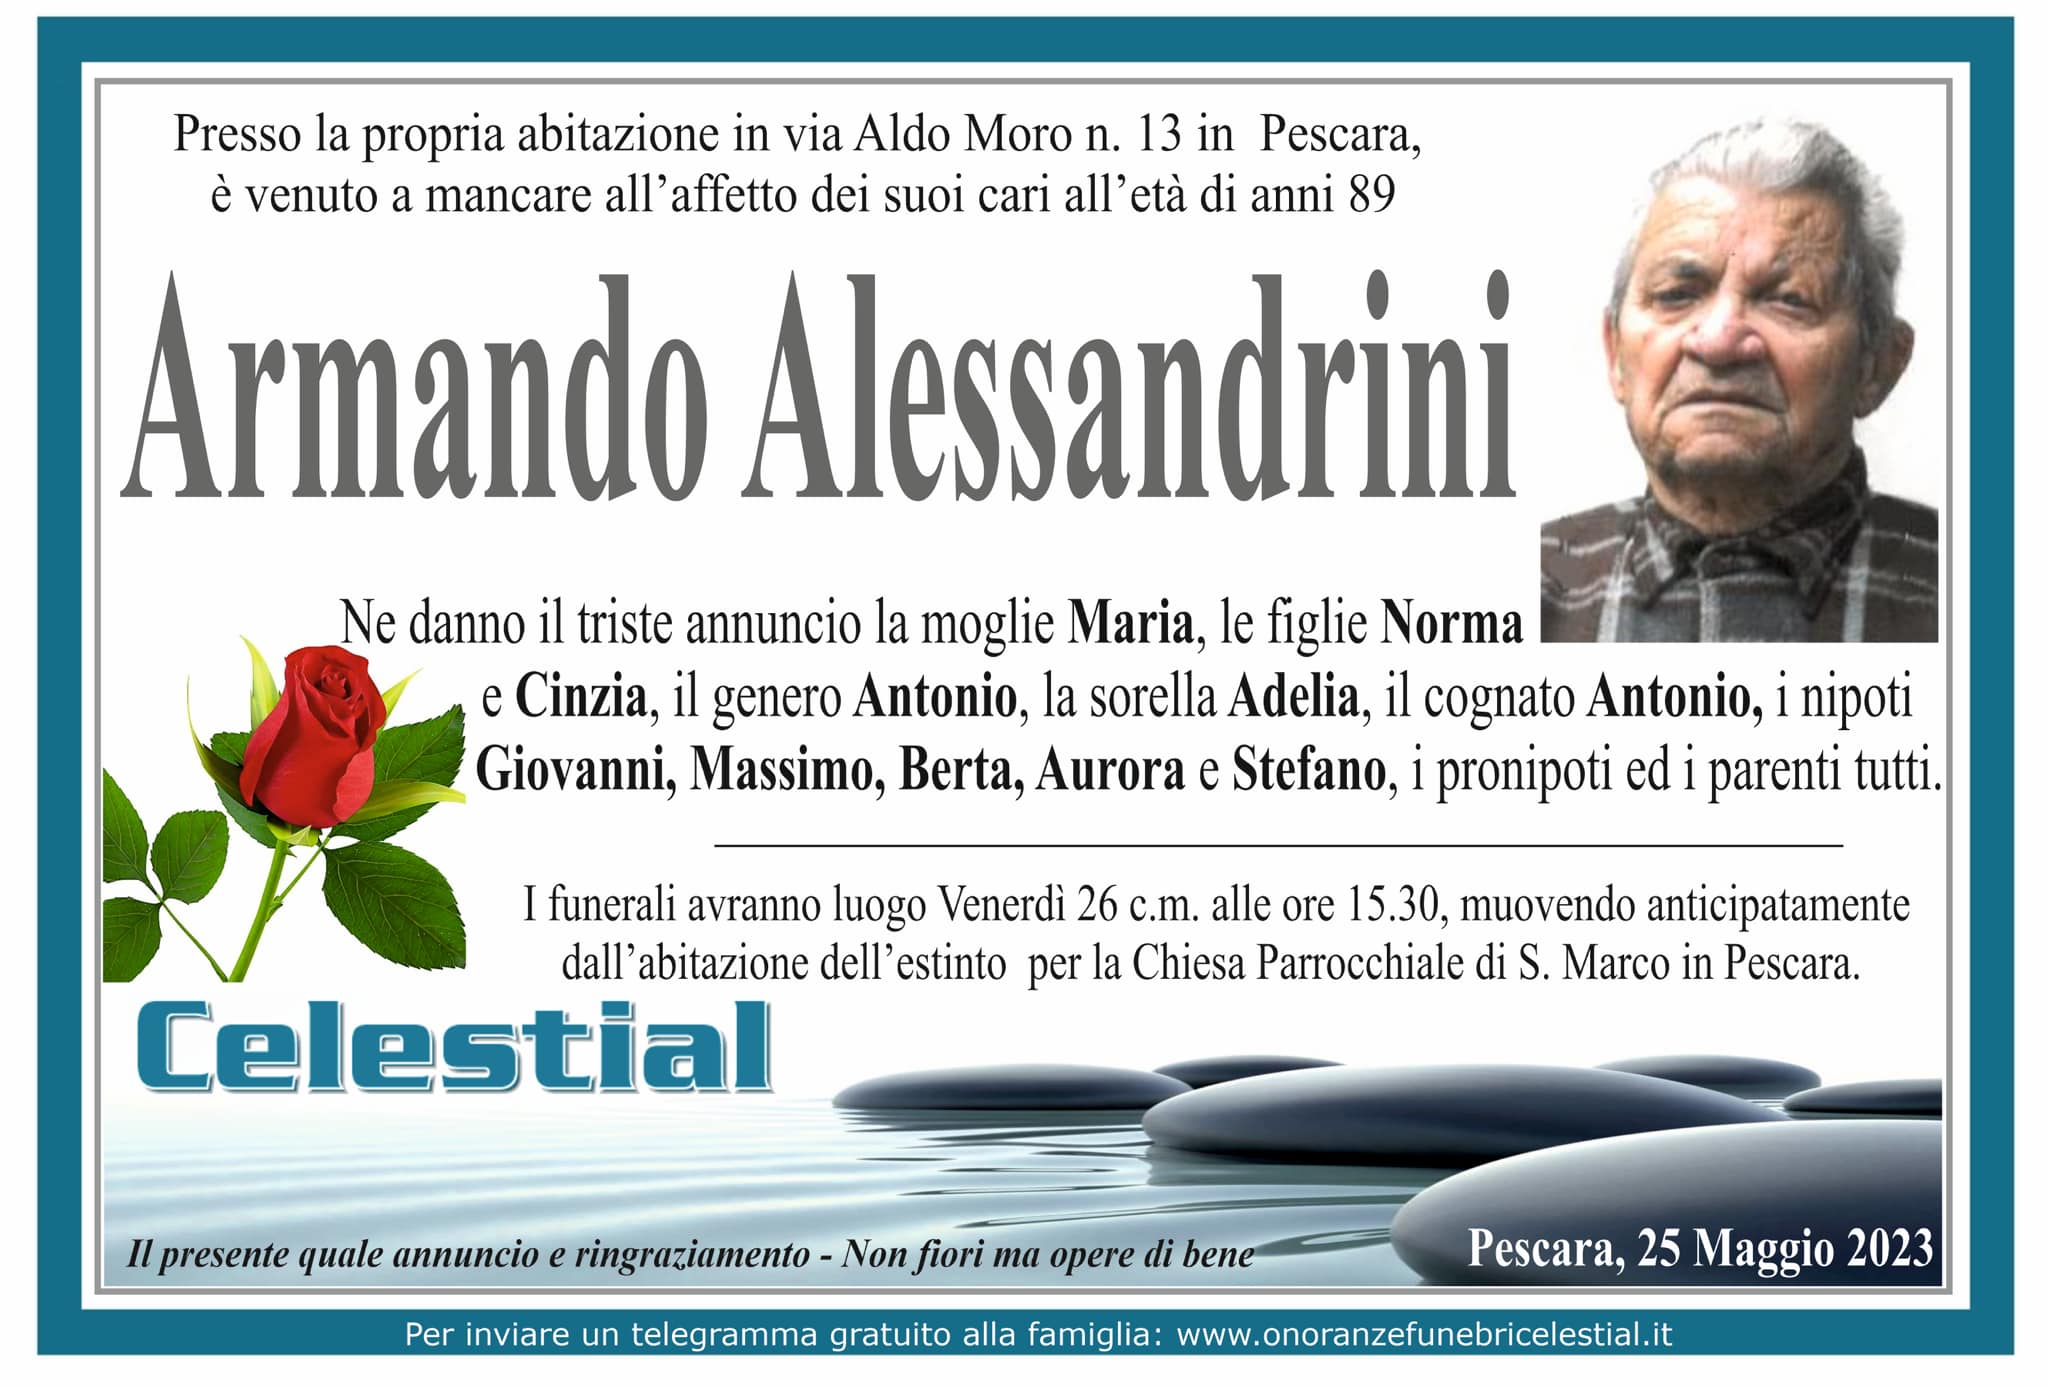 Armando Alessandrini